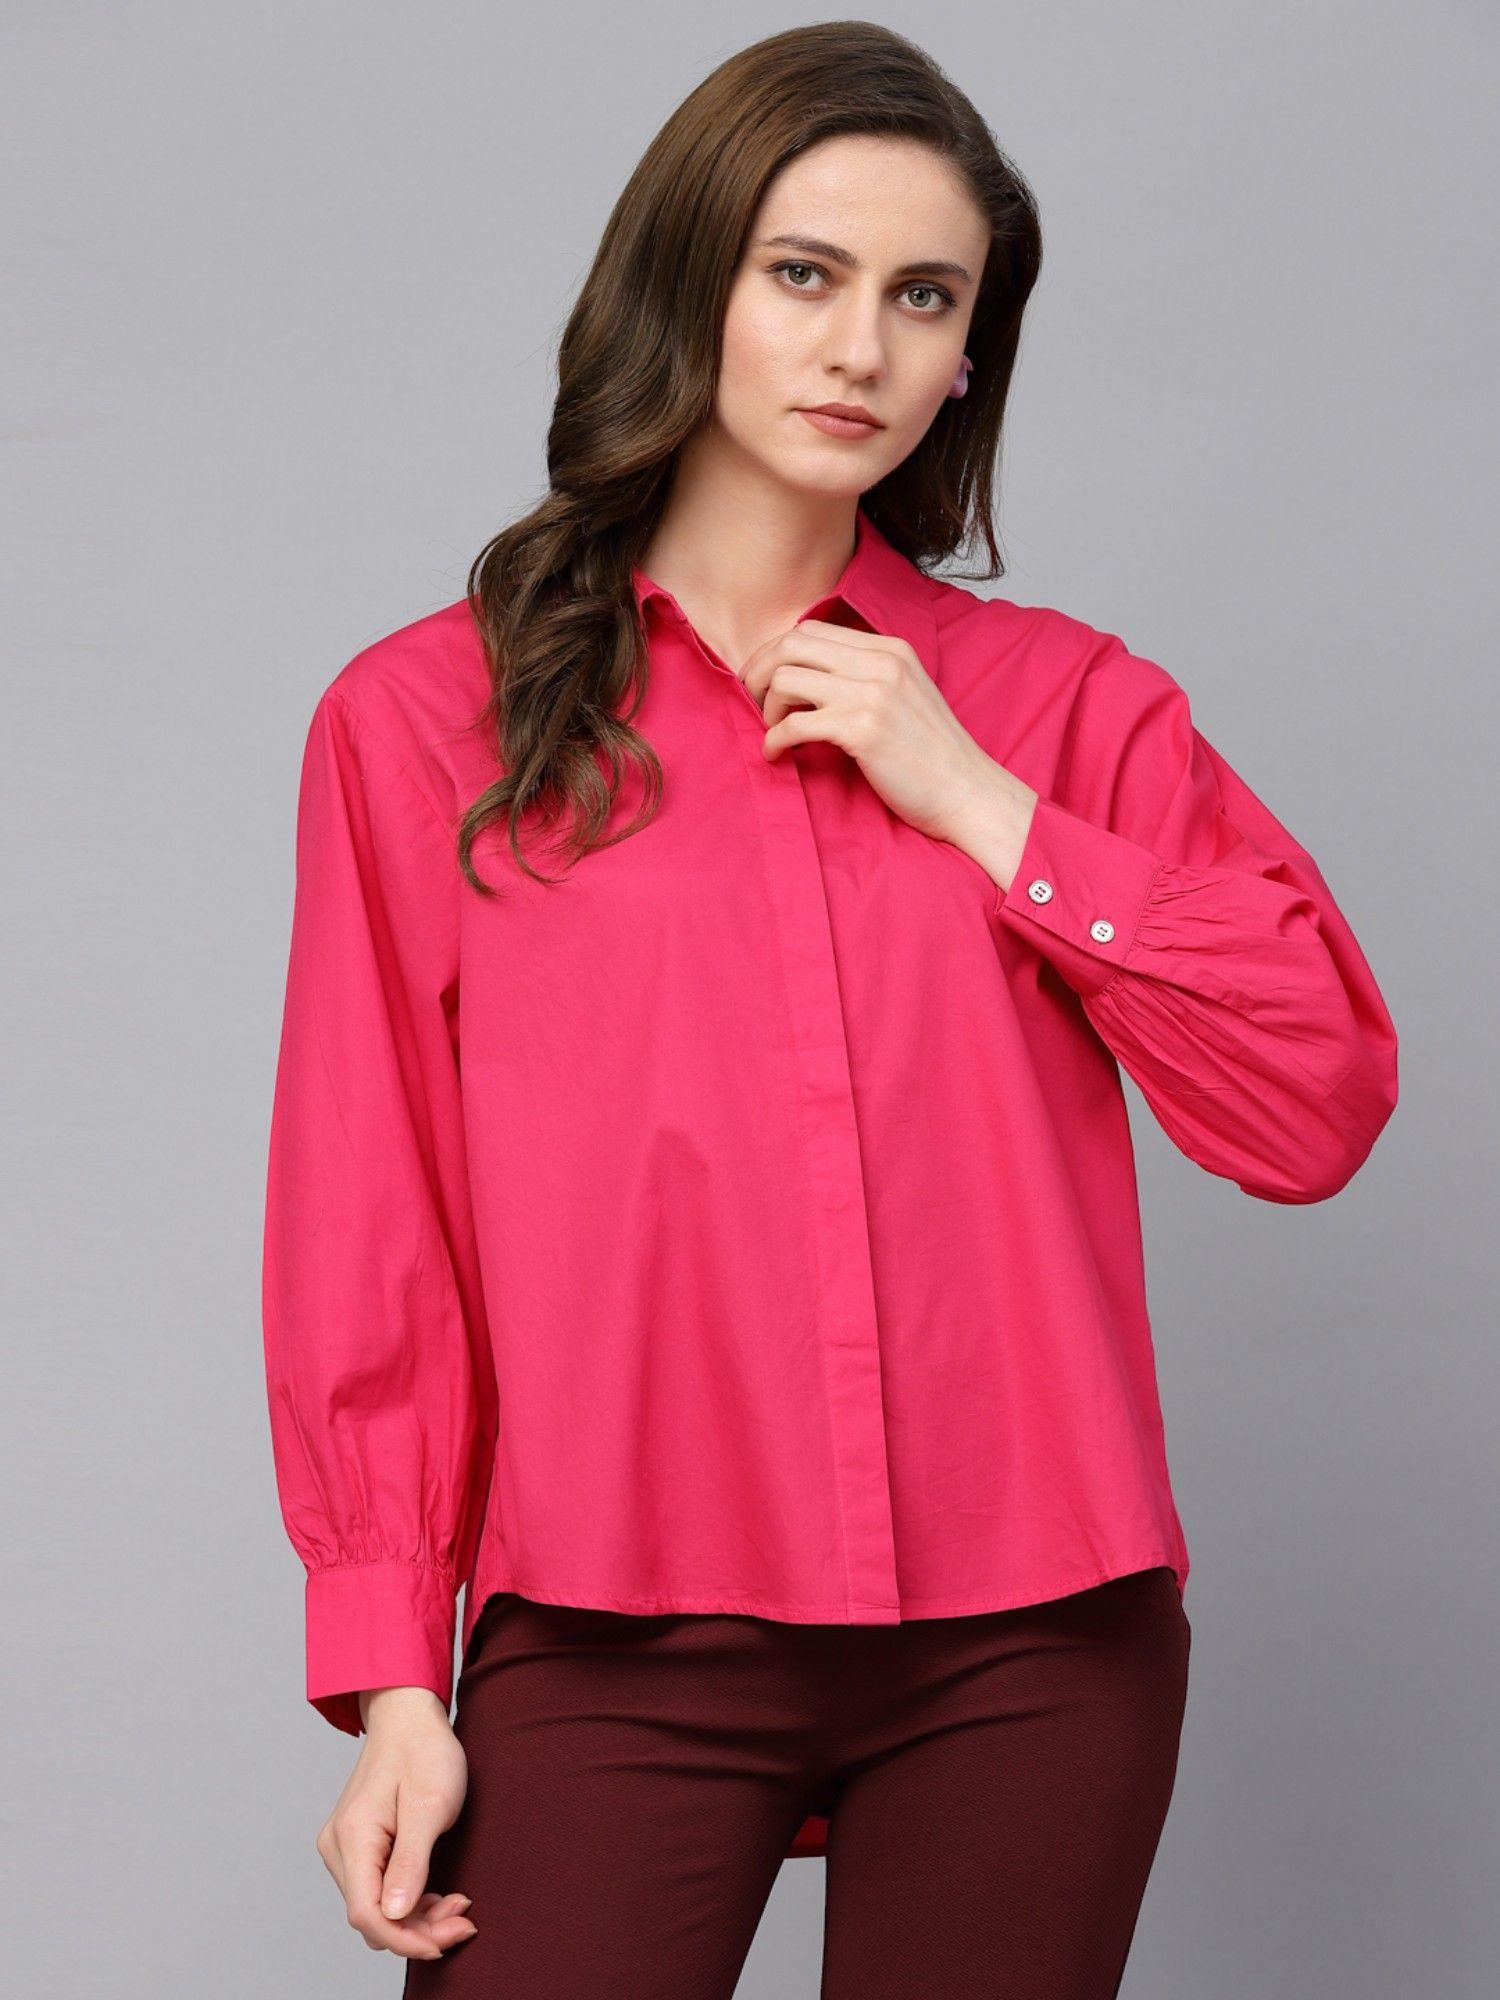 casual pink cotton shirt for women